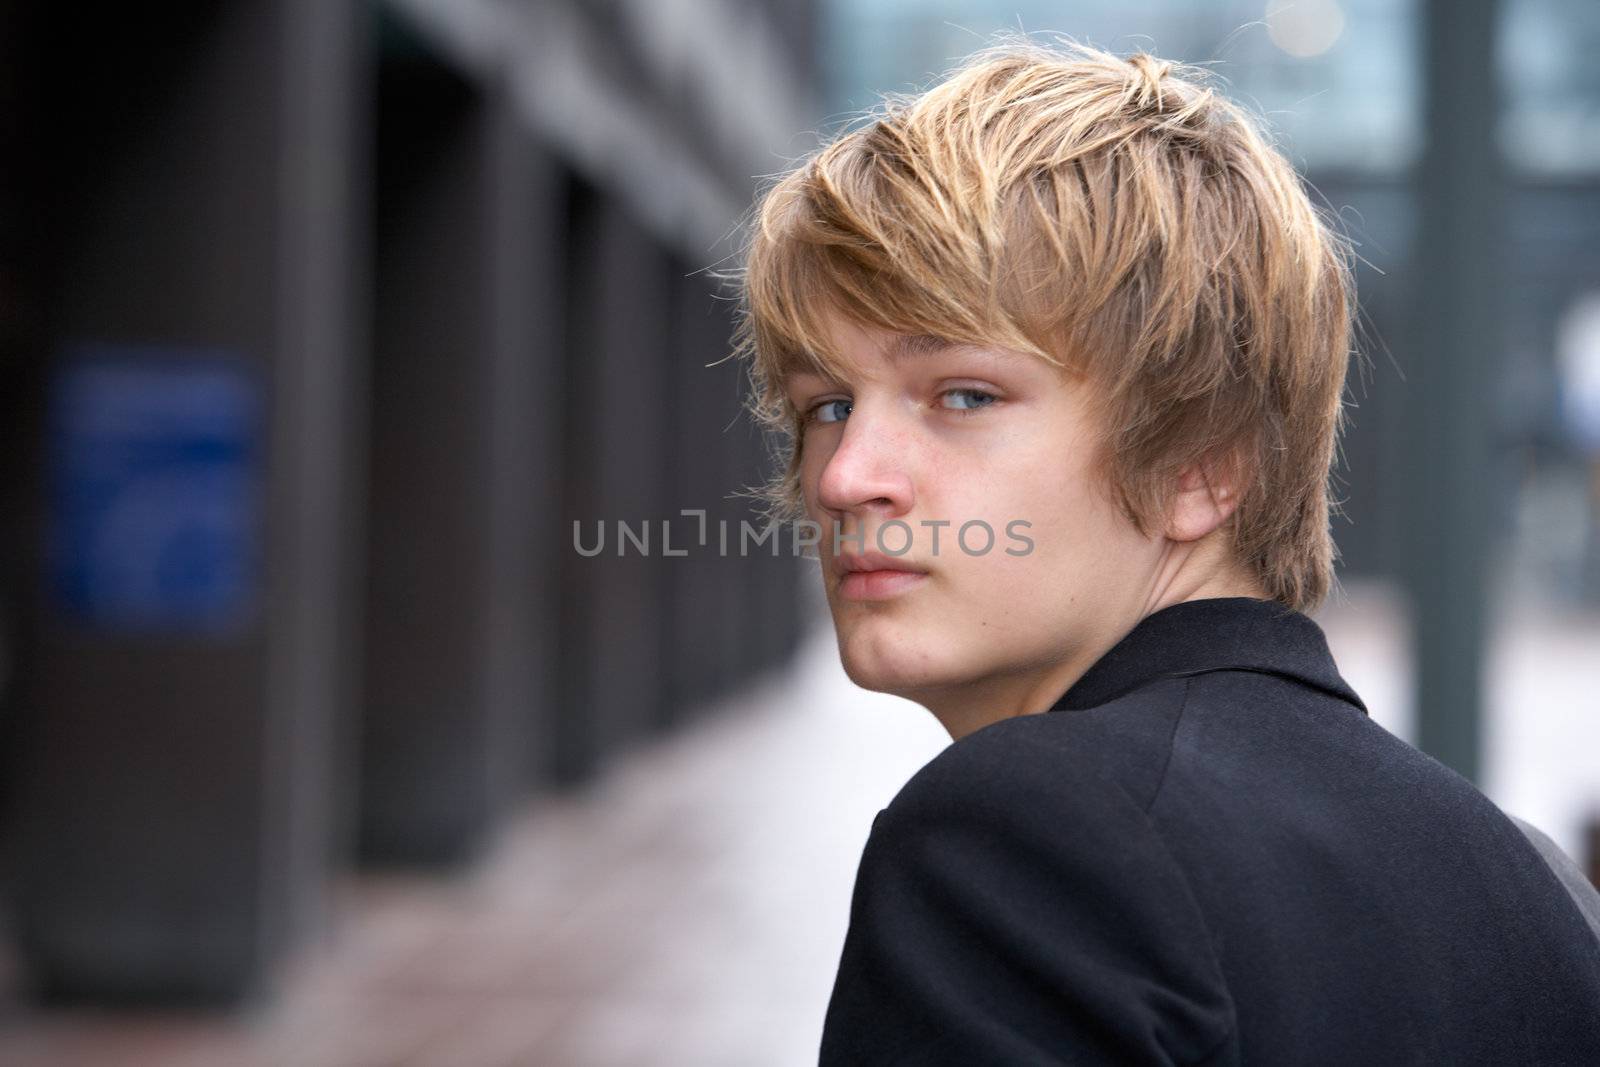 Teenage boy looking back over his shoulder, close-up